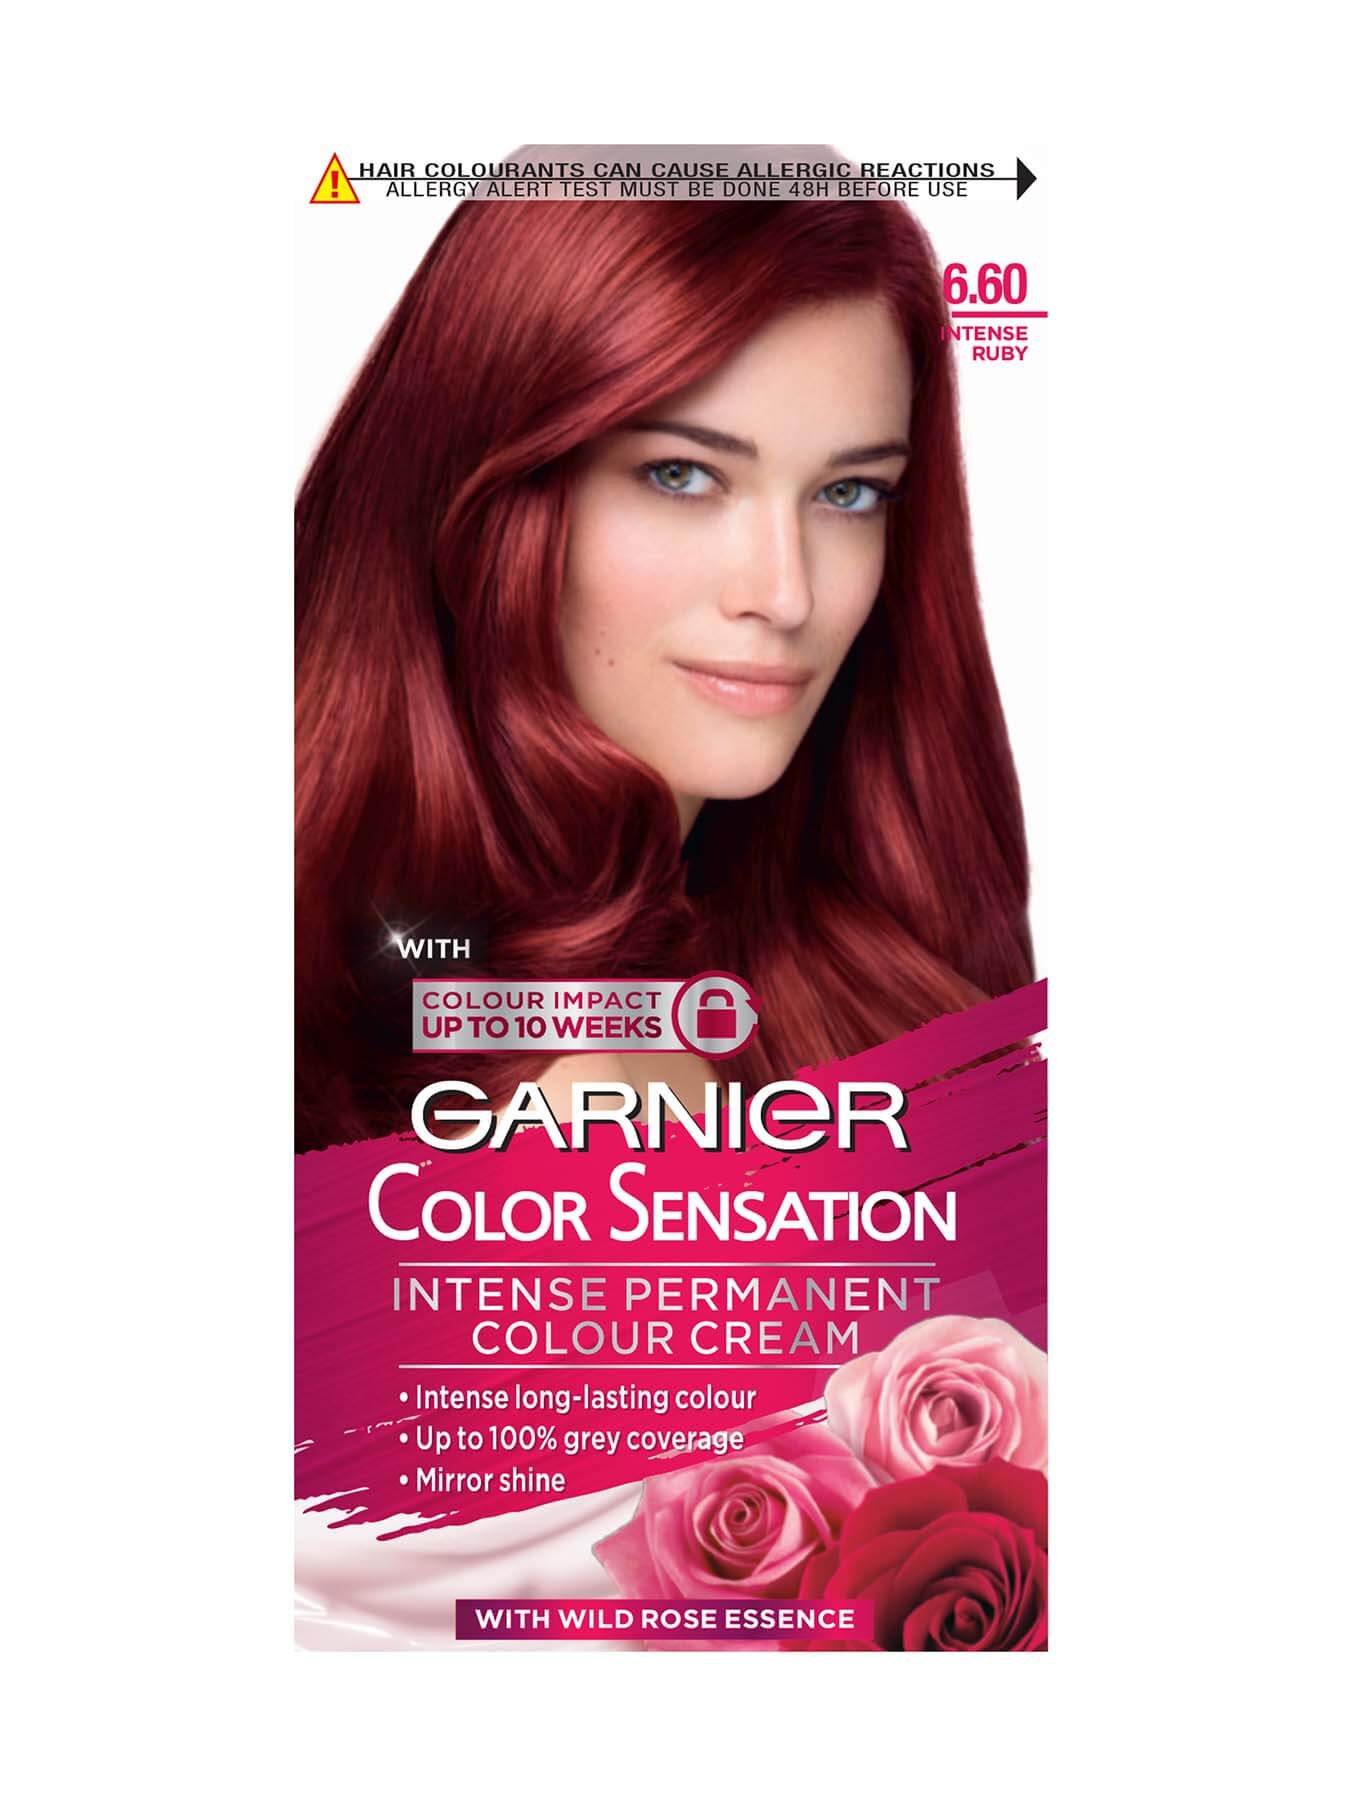 Intense Ruby Red Hair Dye | Color Sensation | Garnier